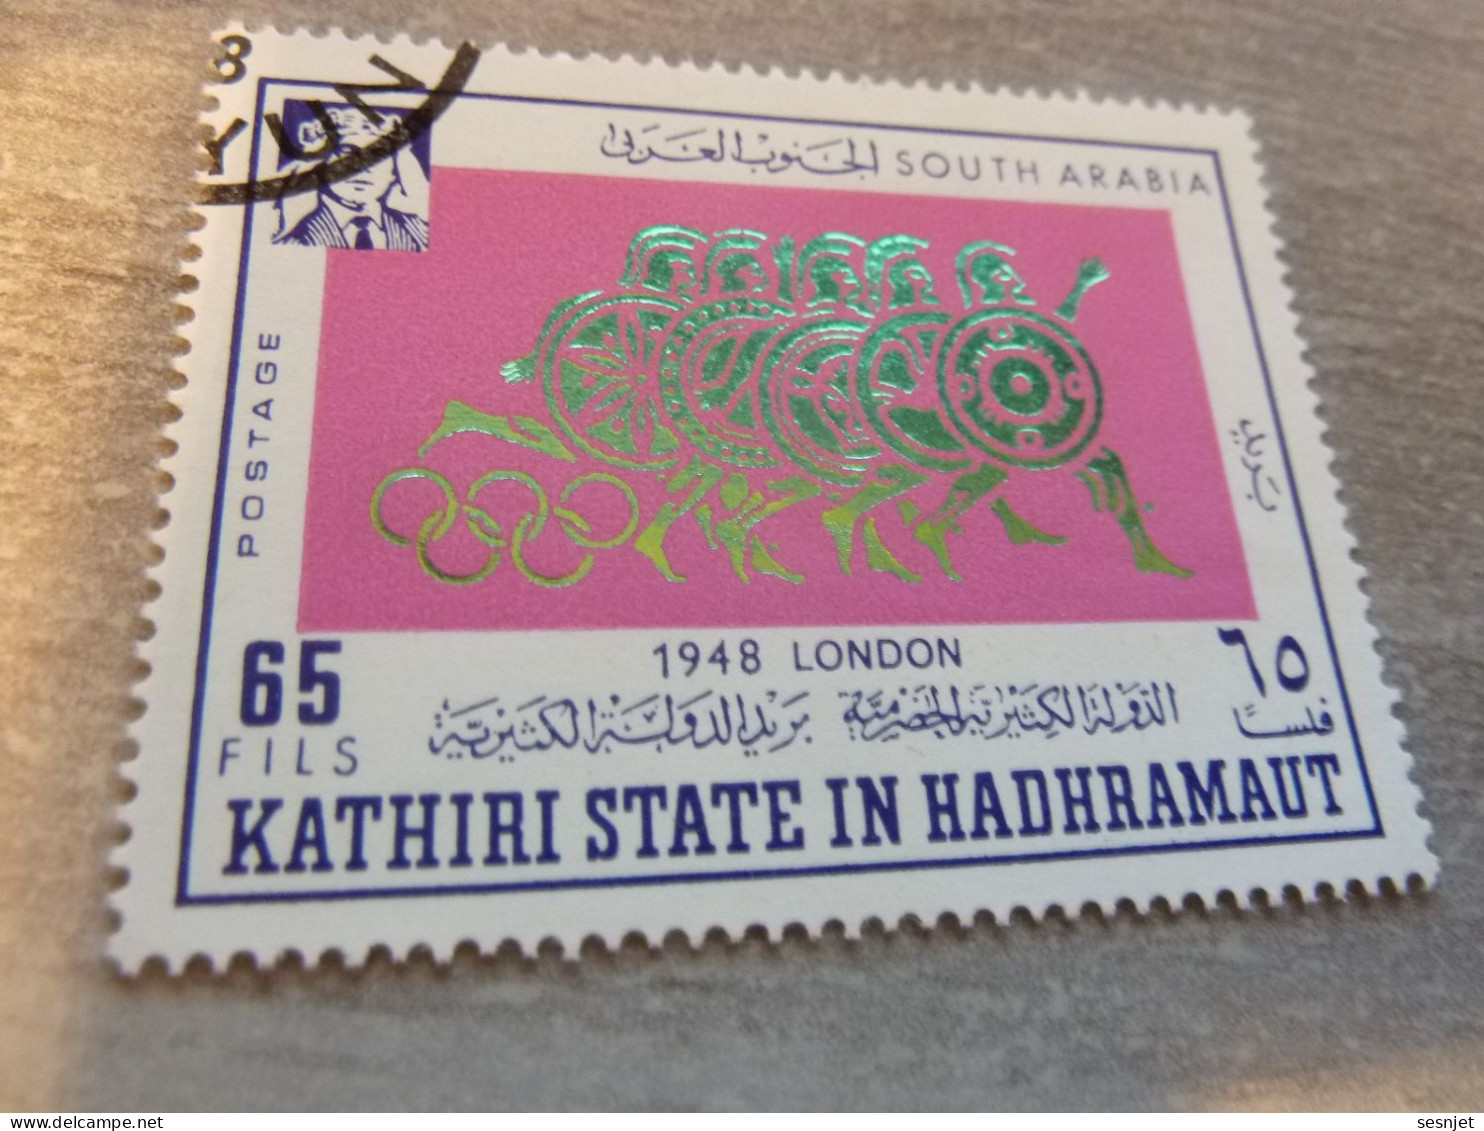 Kathiri State In Hadhramaut - 1948 - London - Val 65 Fils - Postage - Multicolore - Oblitéré - - Verano 1948: Londres